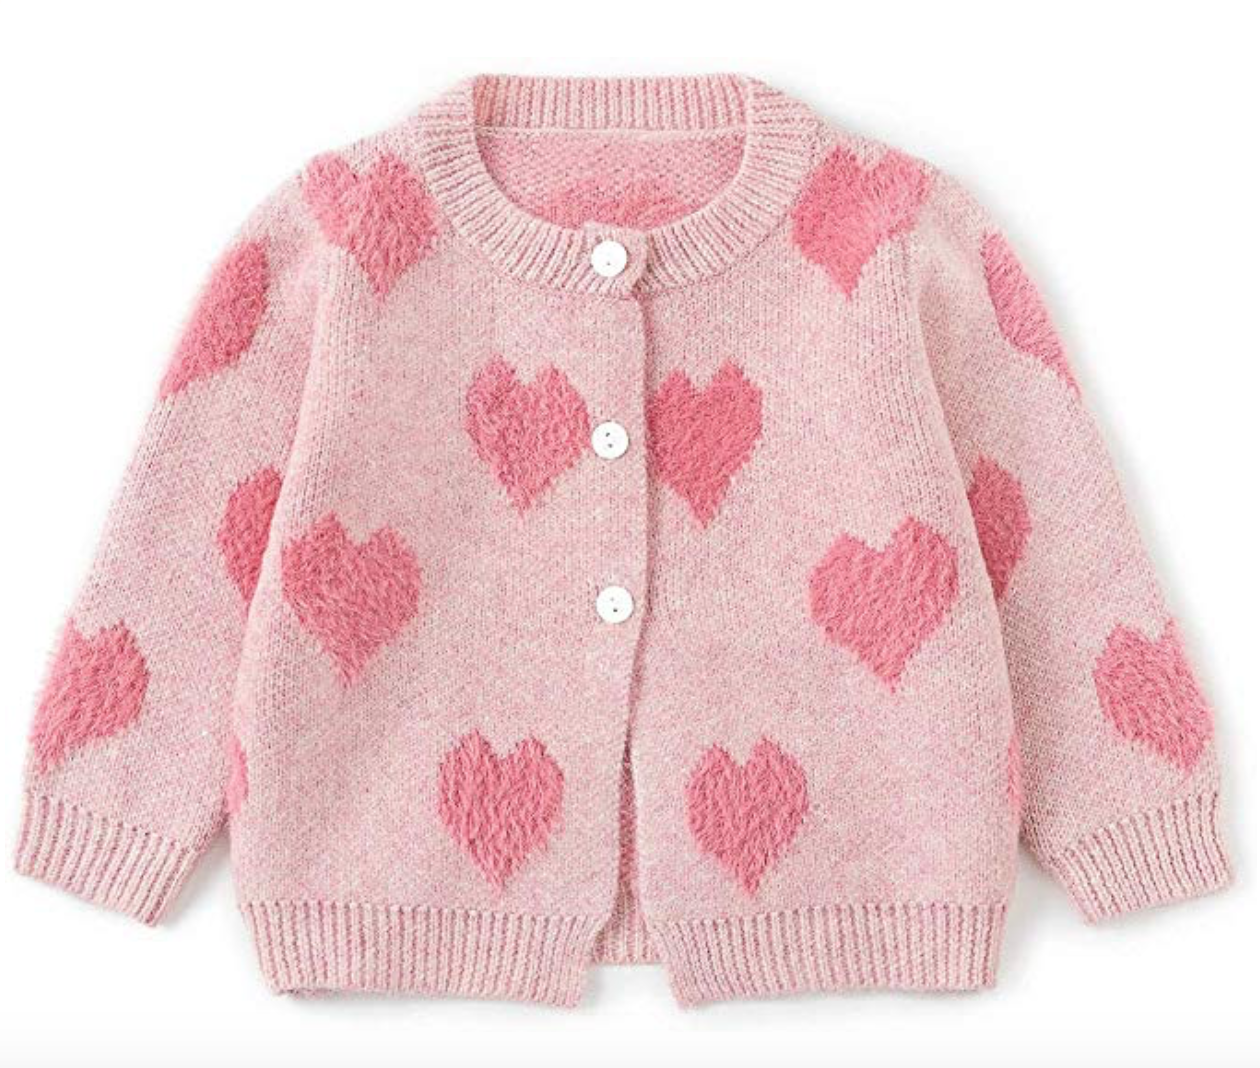 Shiningup Baby Unisex Cardigan Long Sleeve Knitwear Cartoon Thick Warmer Coat Jacket for 9-36 Months Boys Girls by